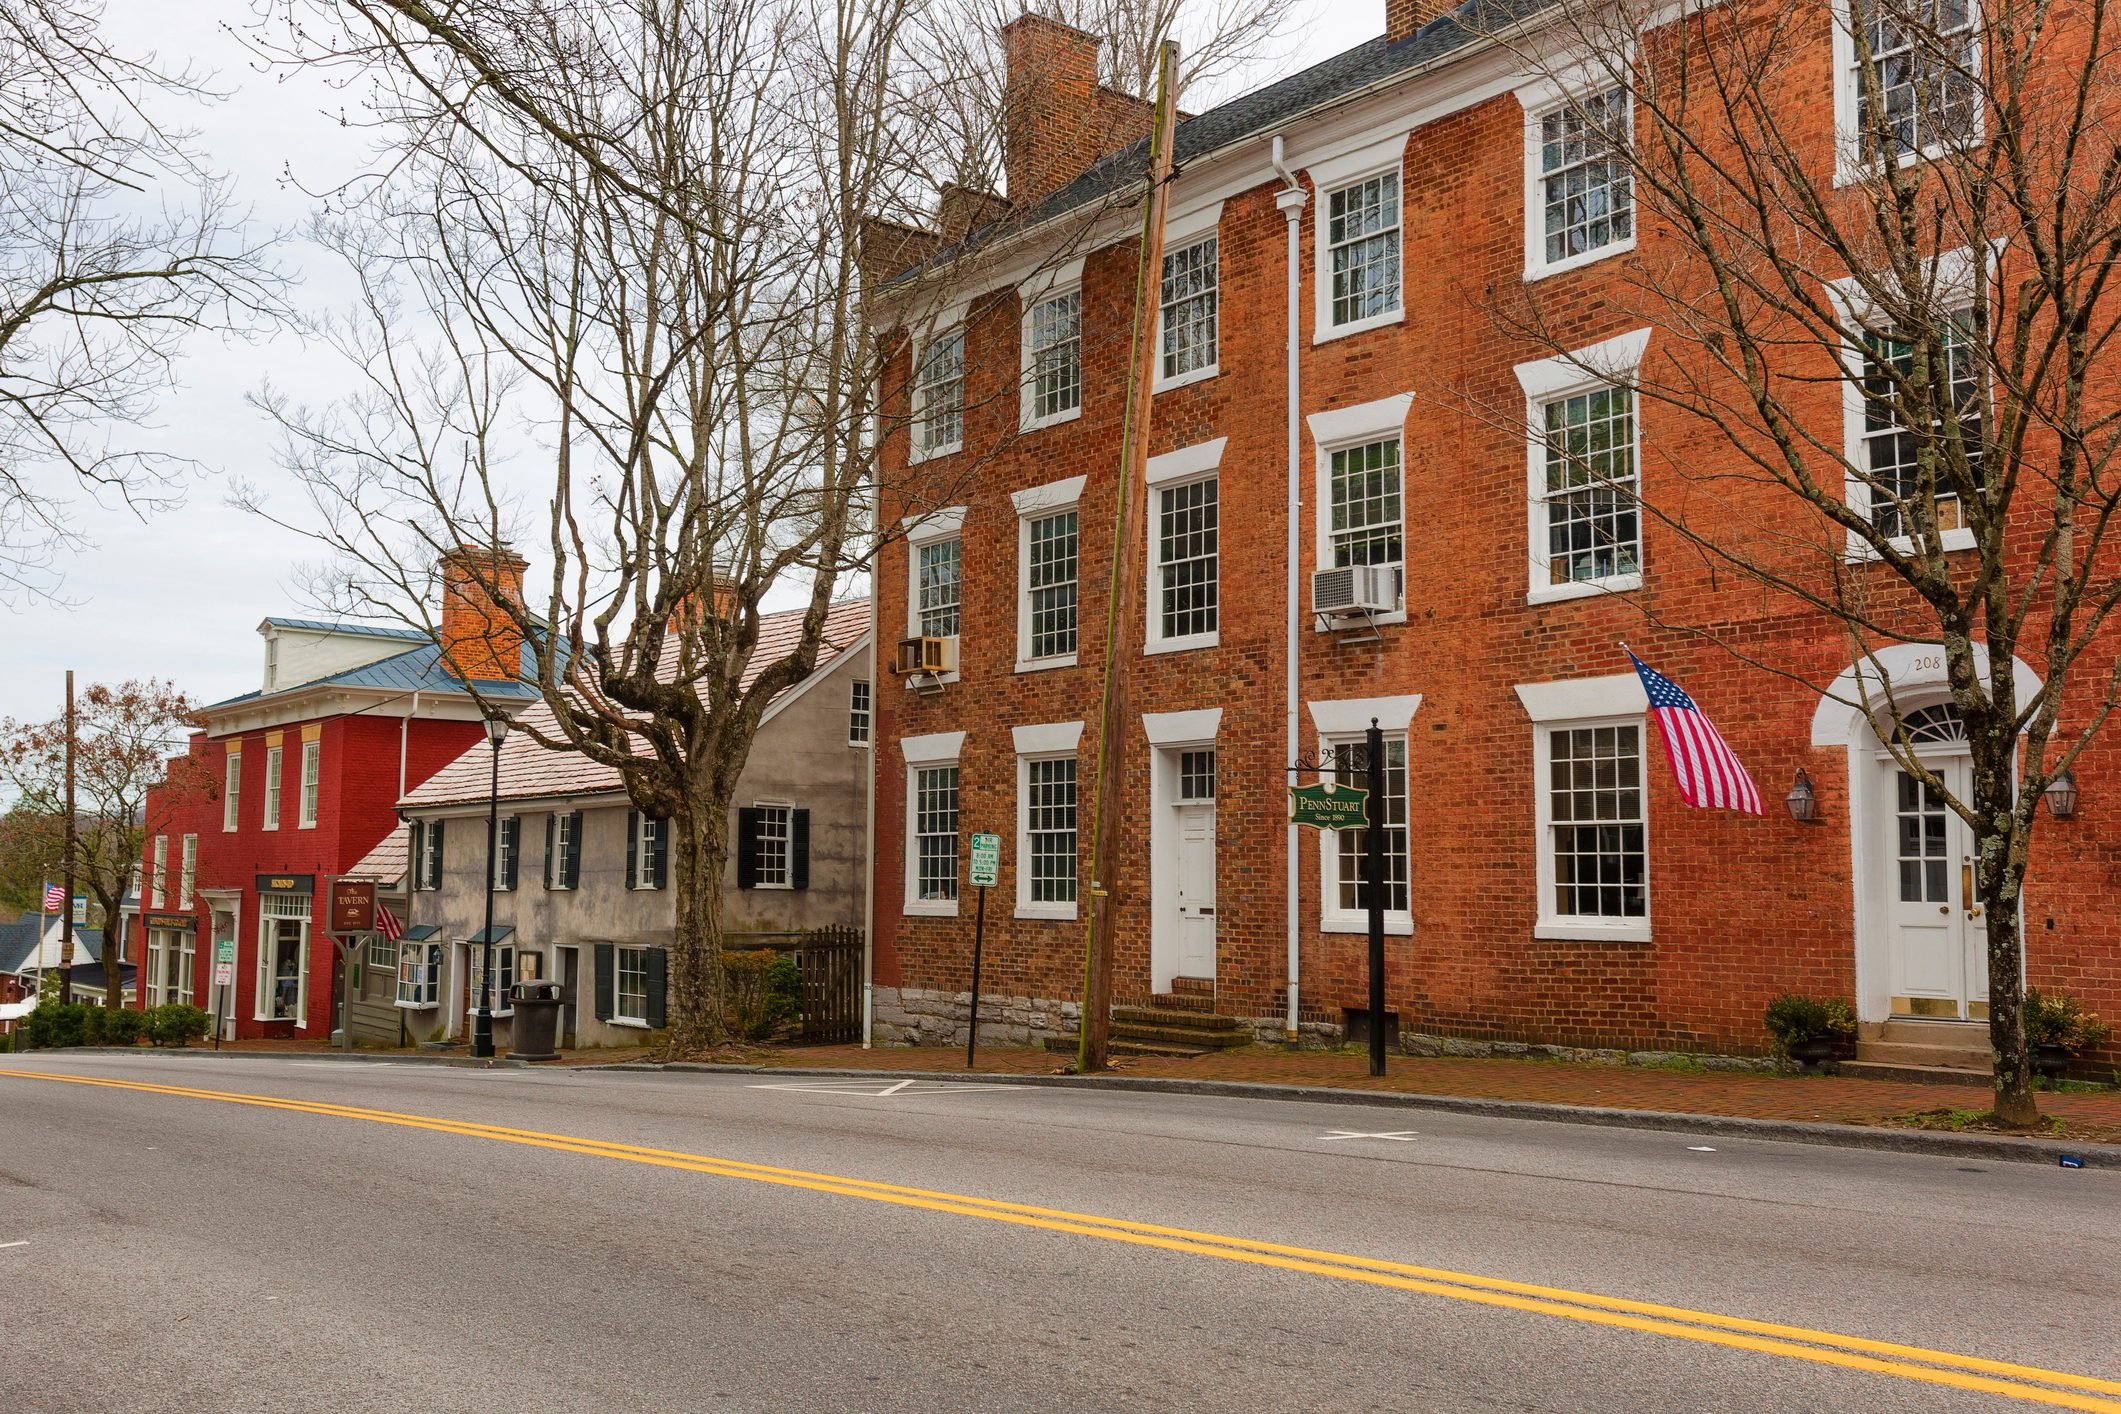 Coronavirus deserted streets of historical District in Abingdon, Virginia